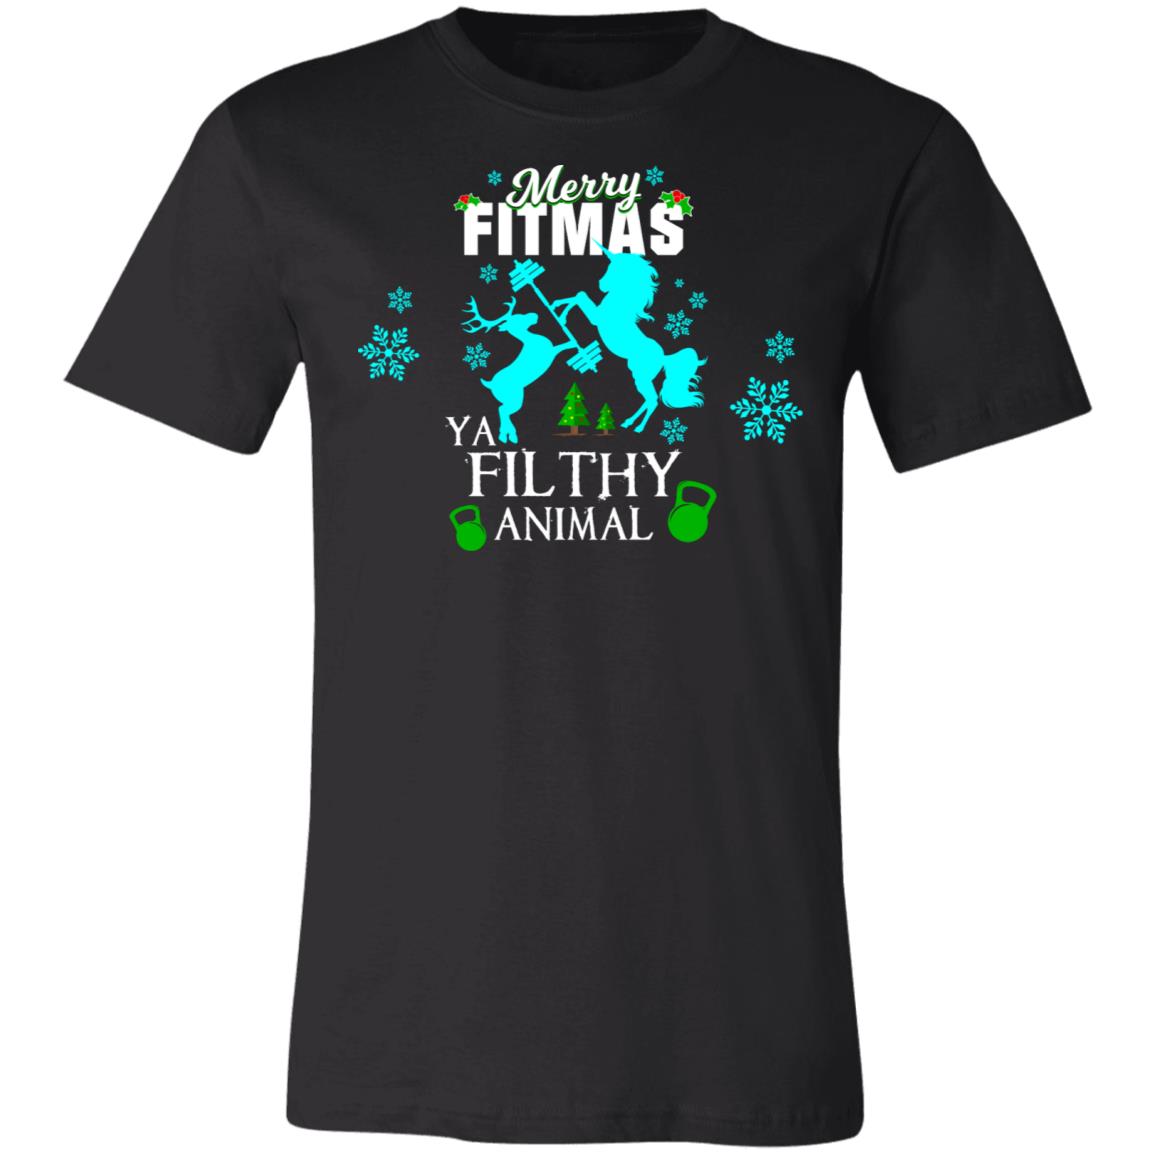 Merry Fitmas Ya Filthy Animal T-Shirt